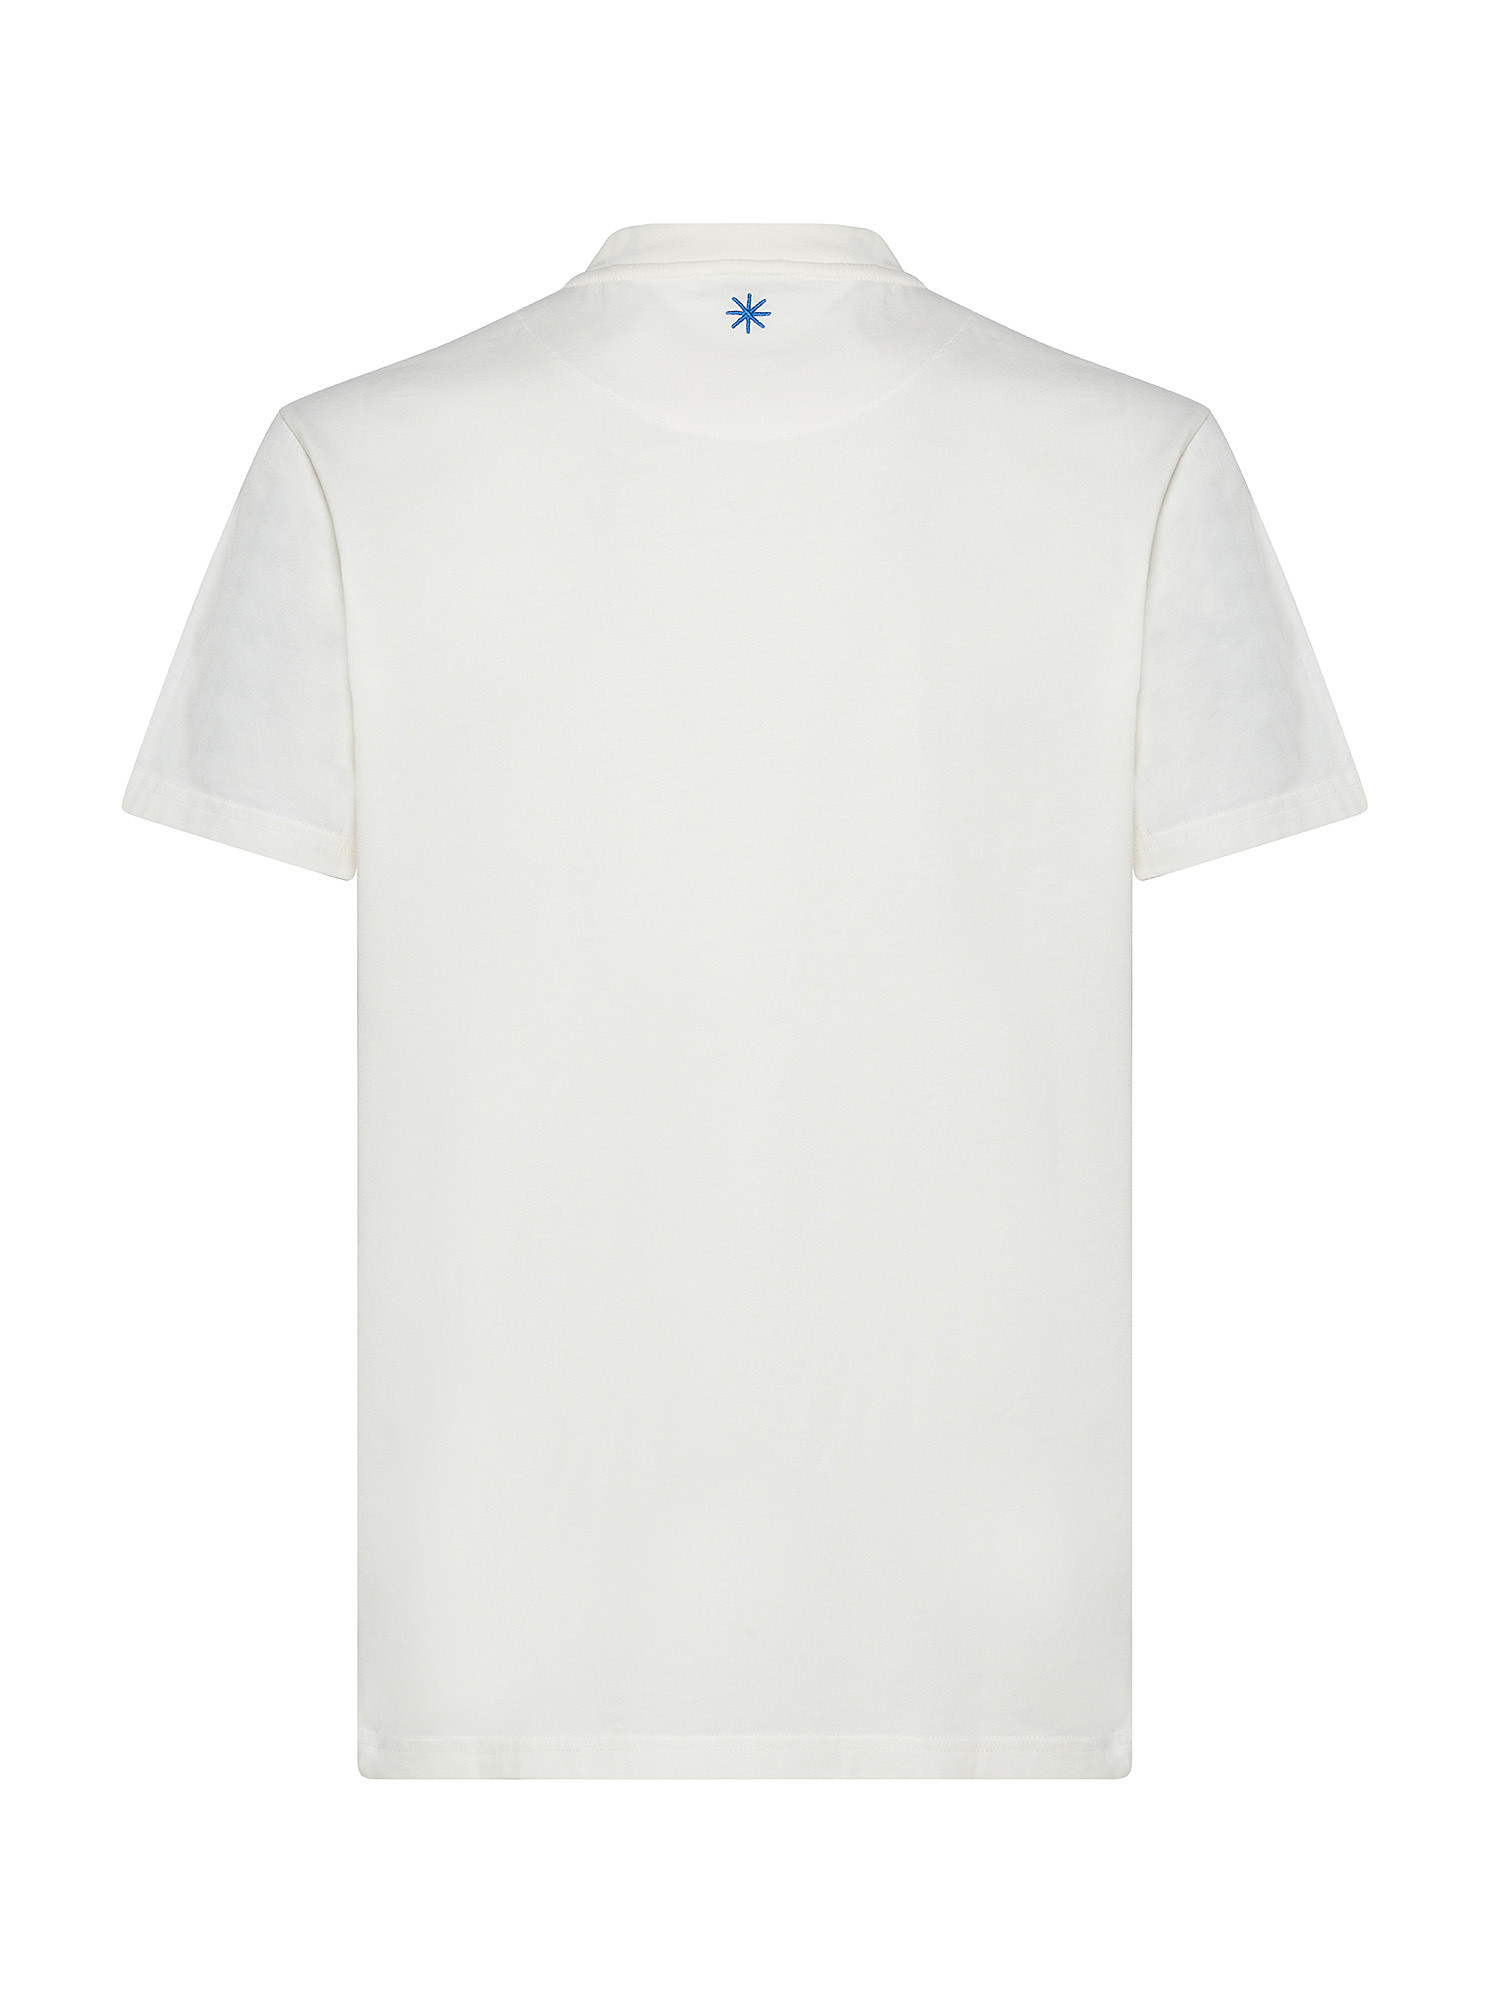 Manuel Ritz - Cotton T-shirt, White, large image number 1